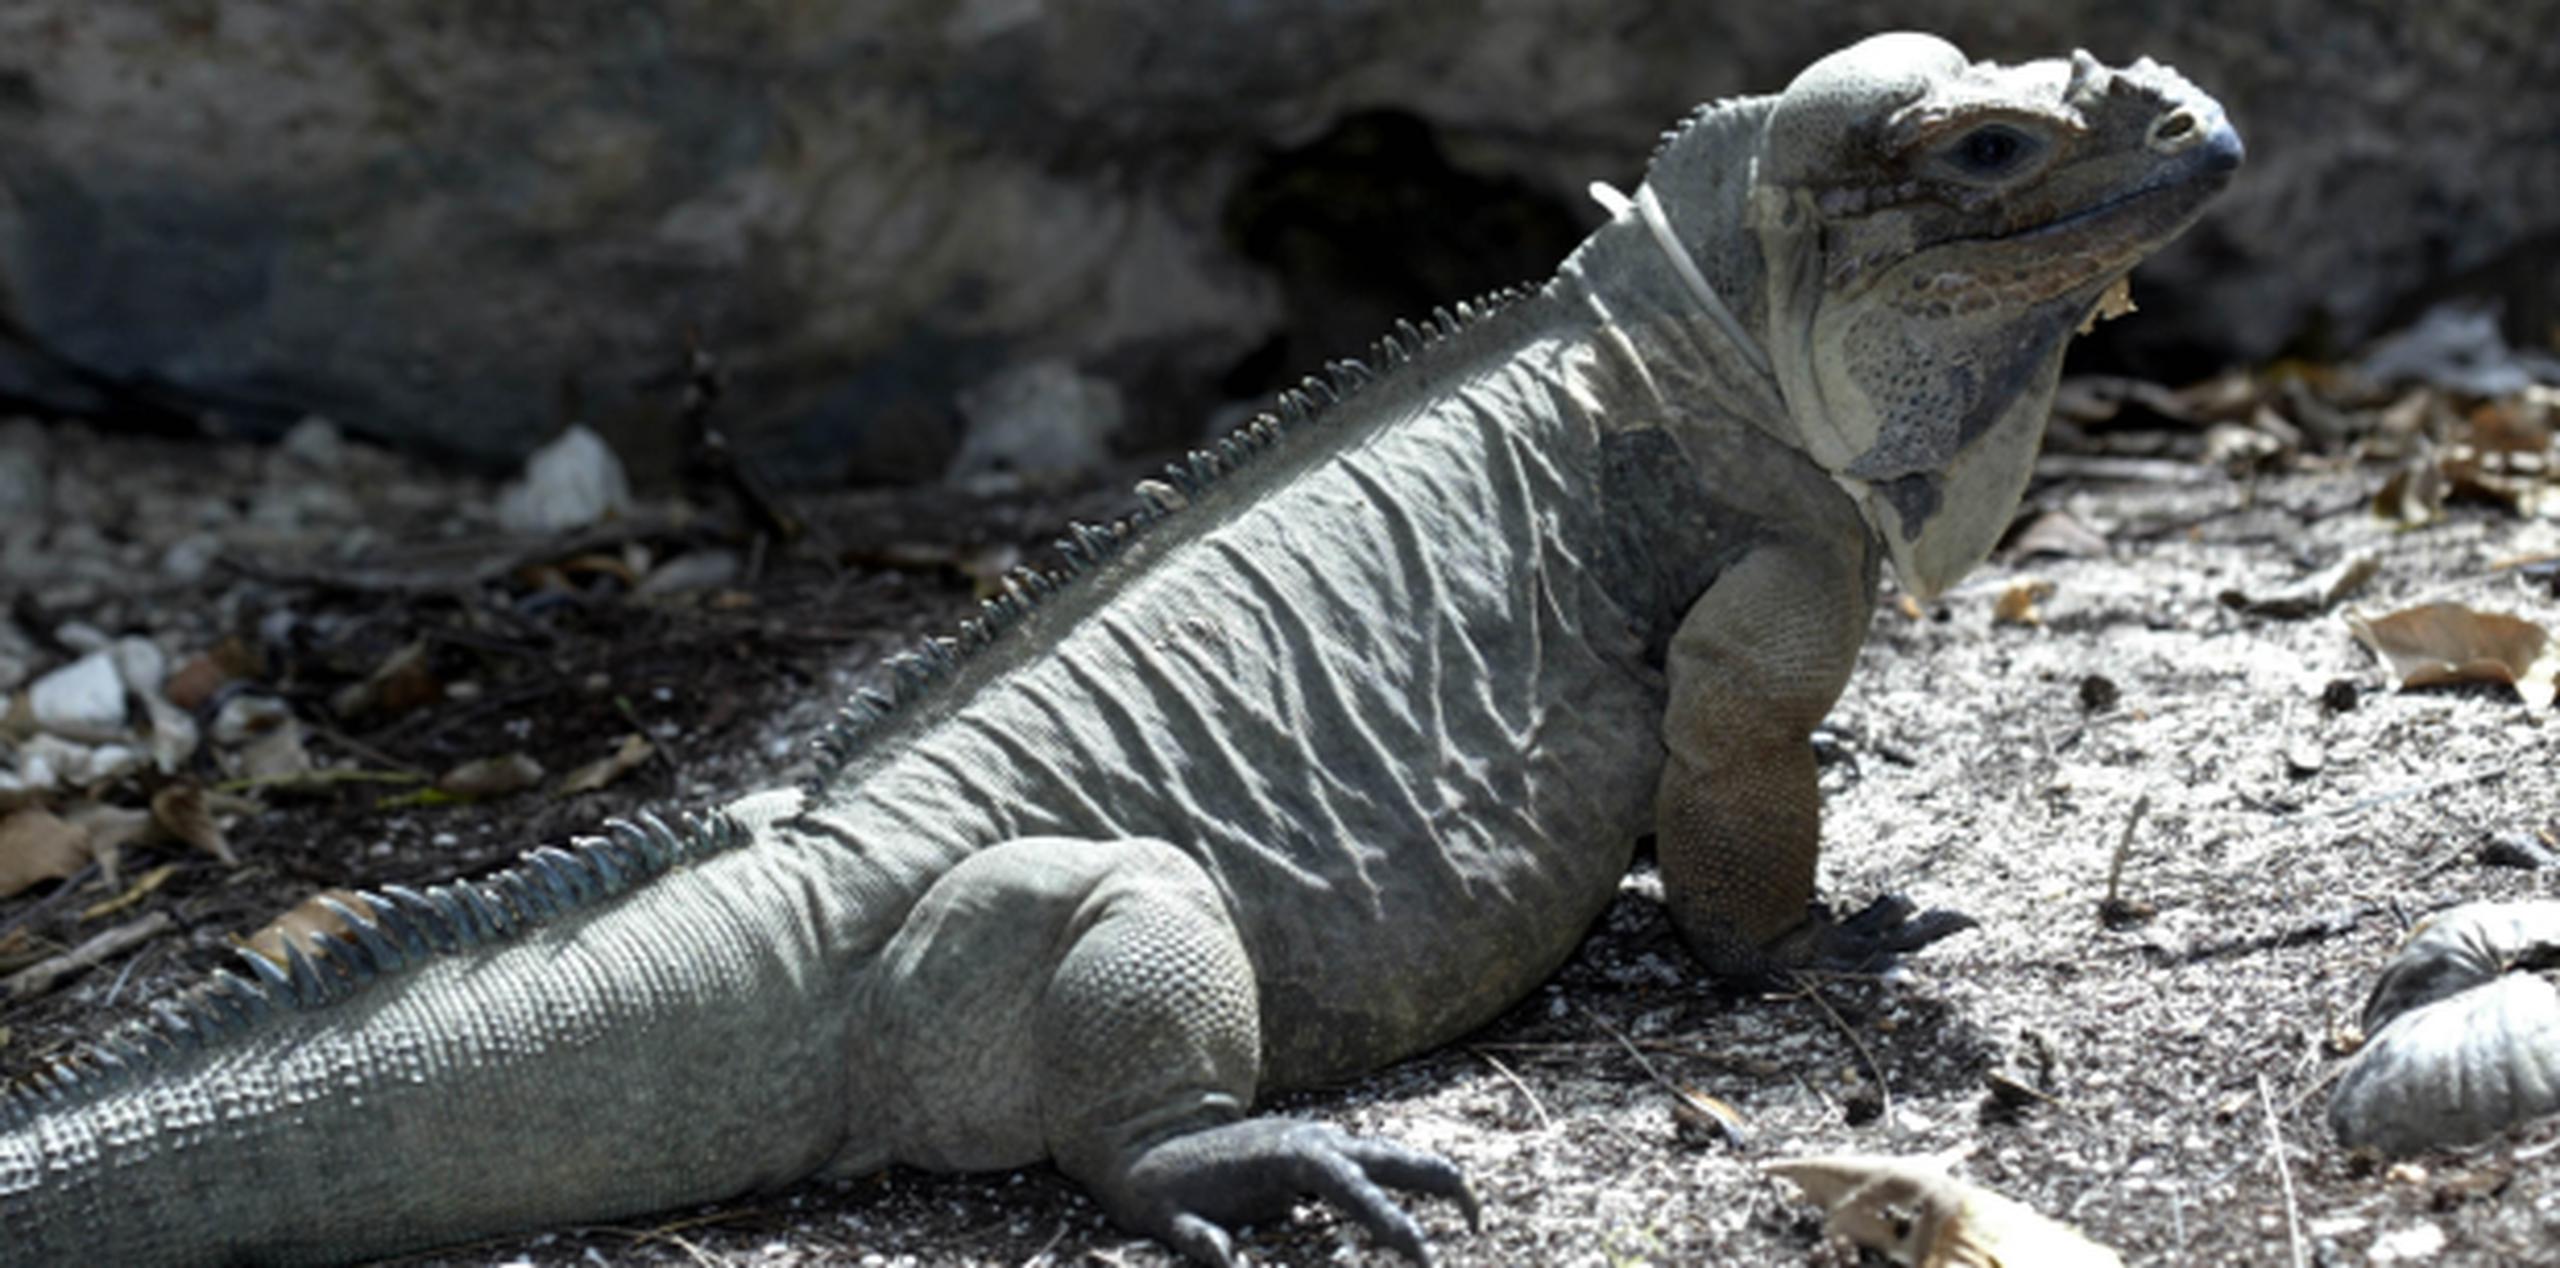 Algunas de las caracter’siticas físicas que le da a la iguana su aspecto prehistórico. (jorge.ramirez@gfrmedia.com)